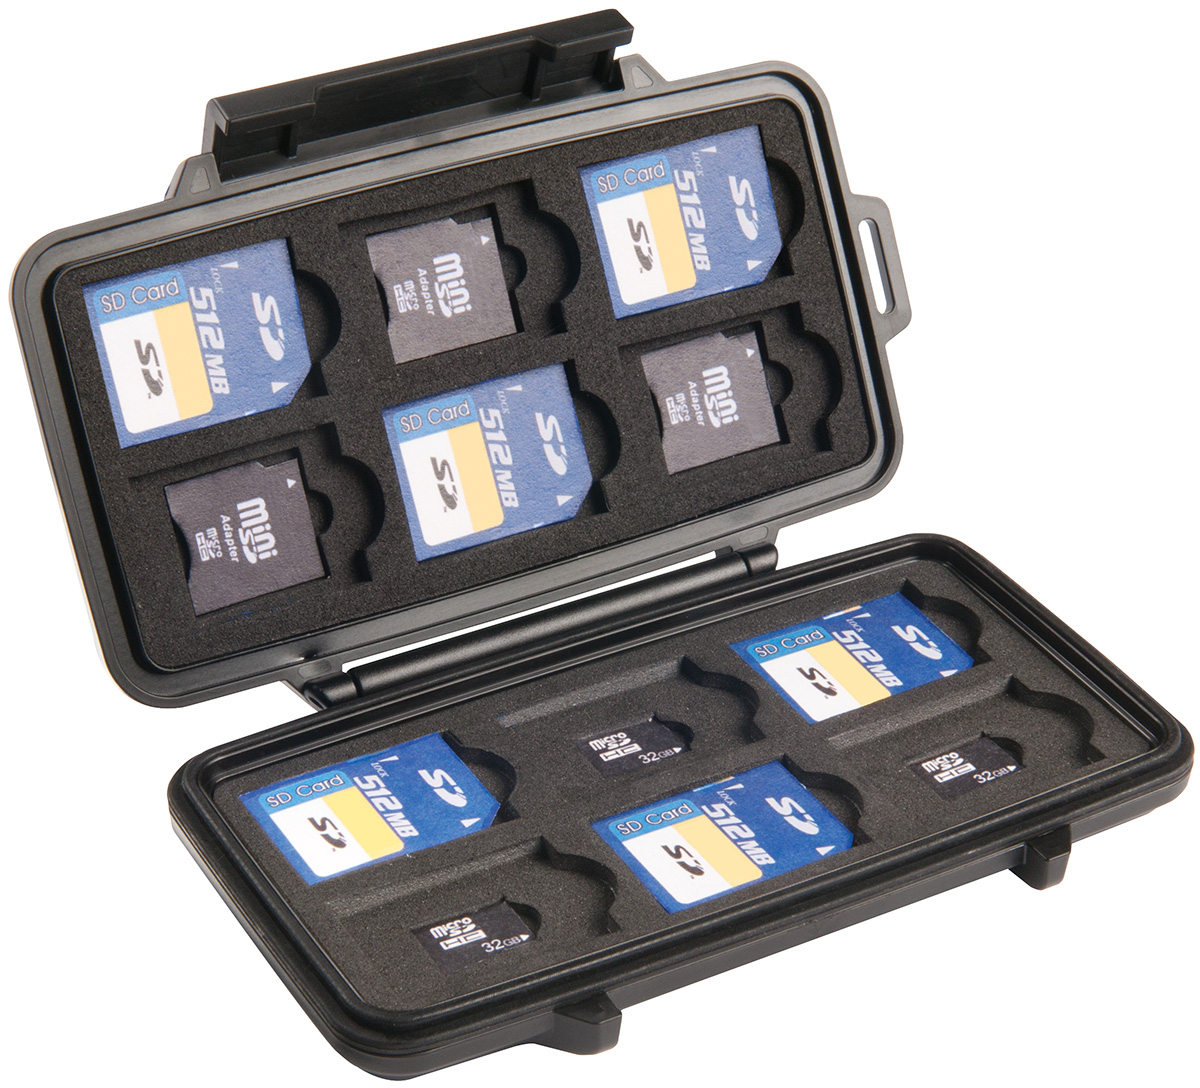 PELI 0915 SD card case zwart voor (micro) SD cards